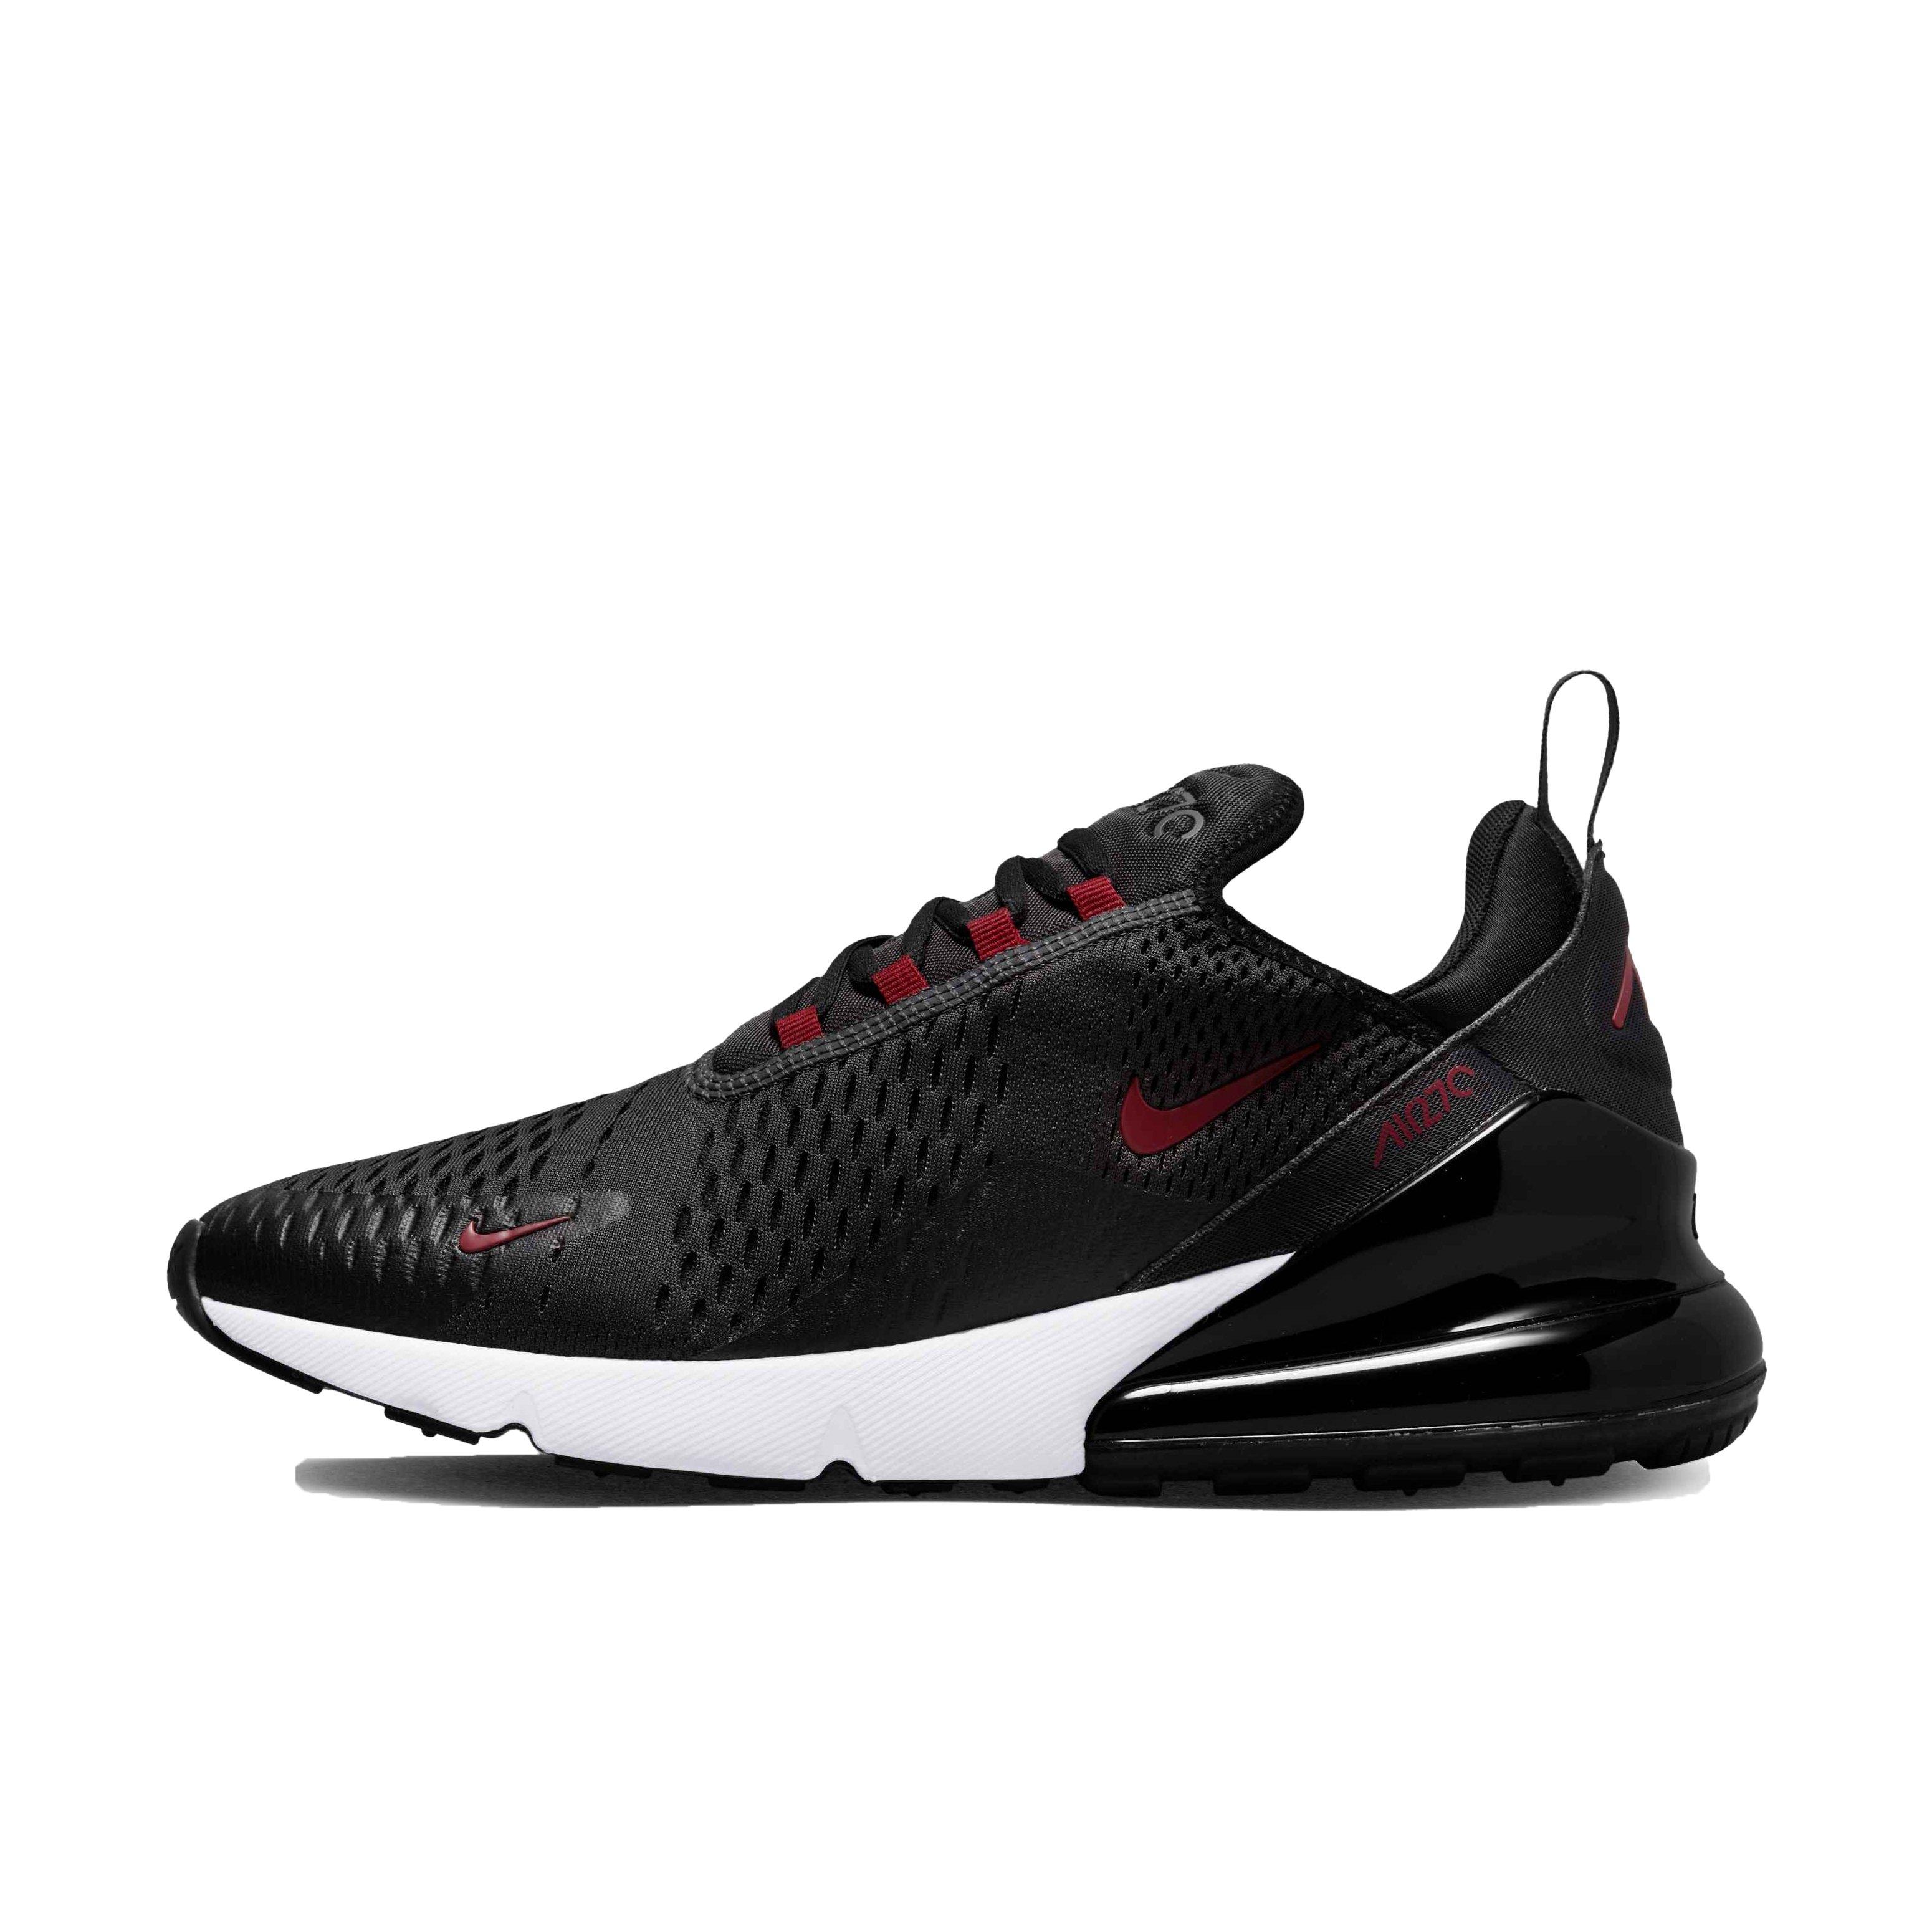 vreugde Afleiden Bepalen Nike Air Max 270 "Anthracite/Team Red/Black/White" Men's Shoe